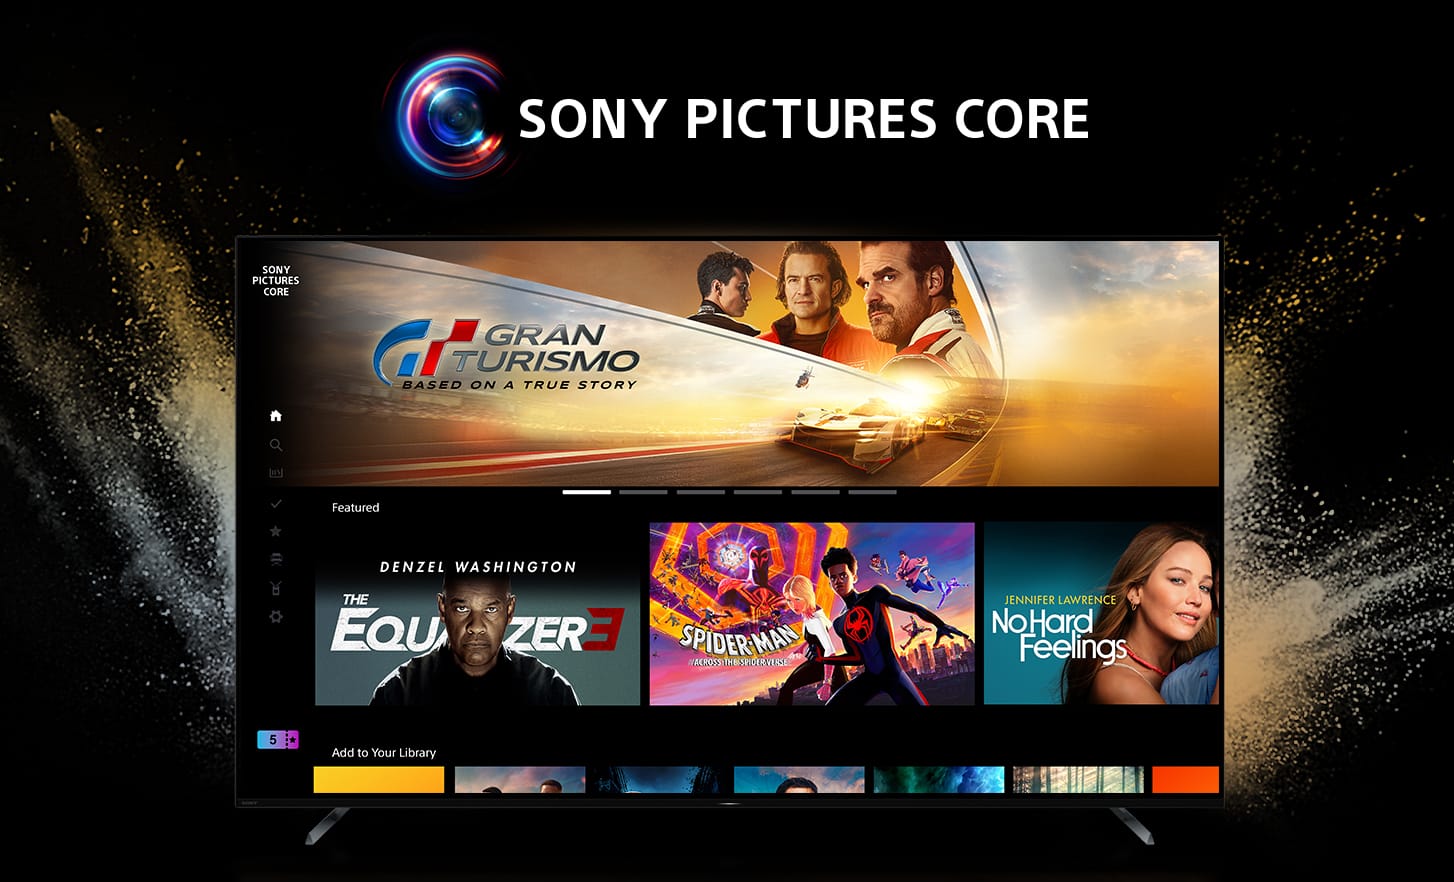 Sony Pictures Core app